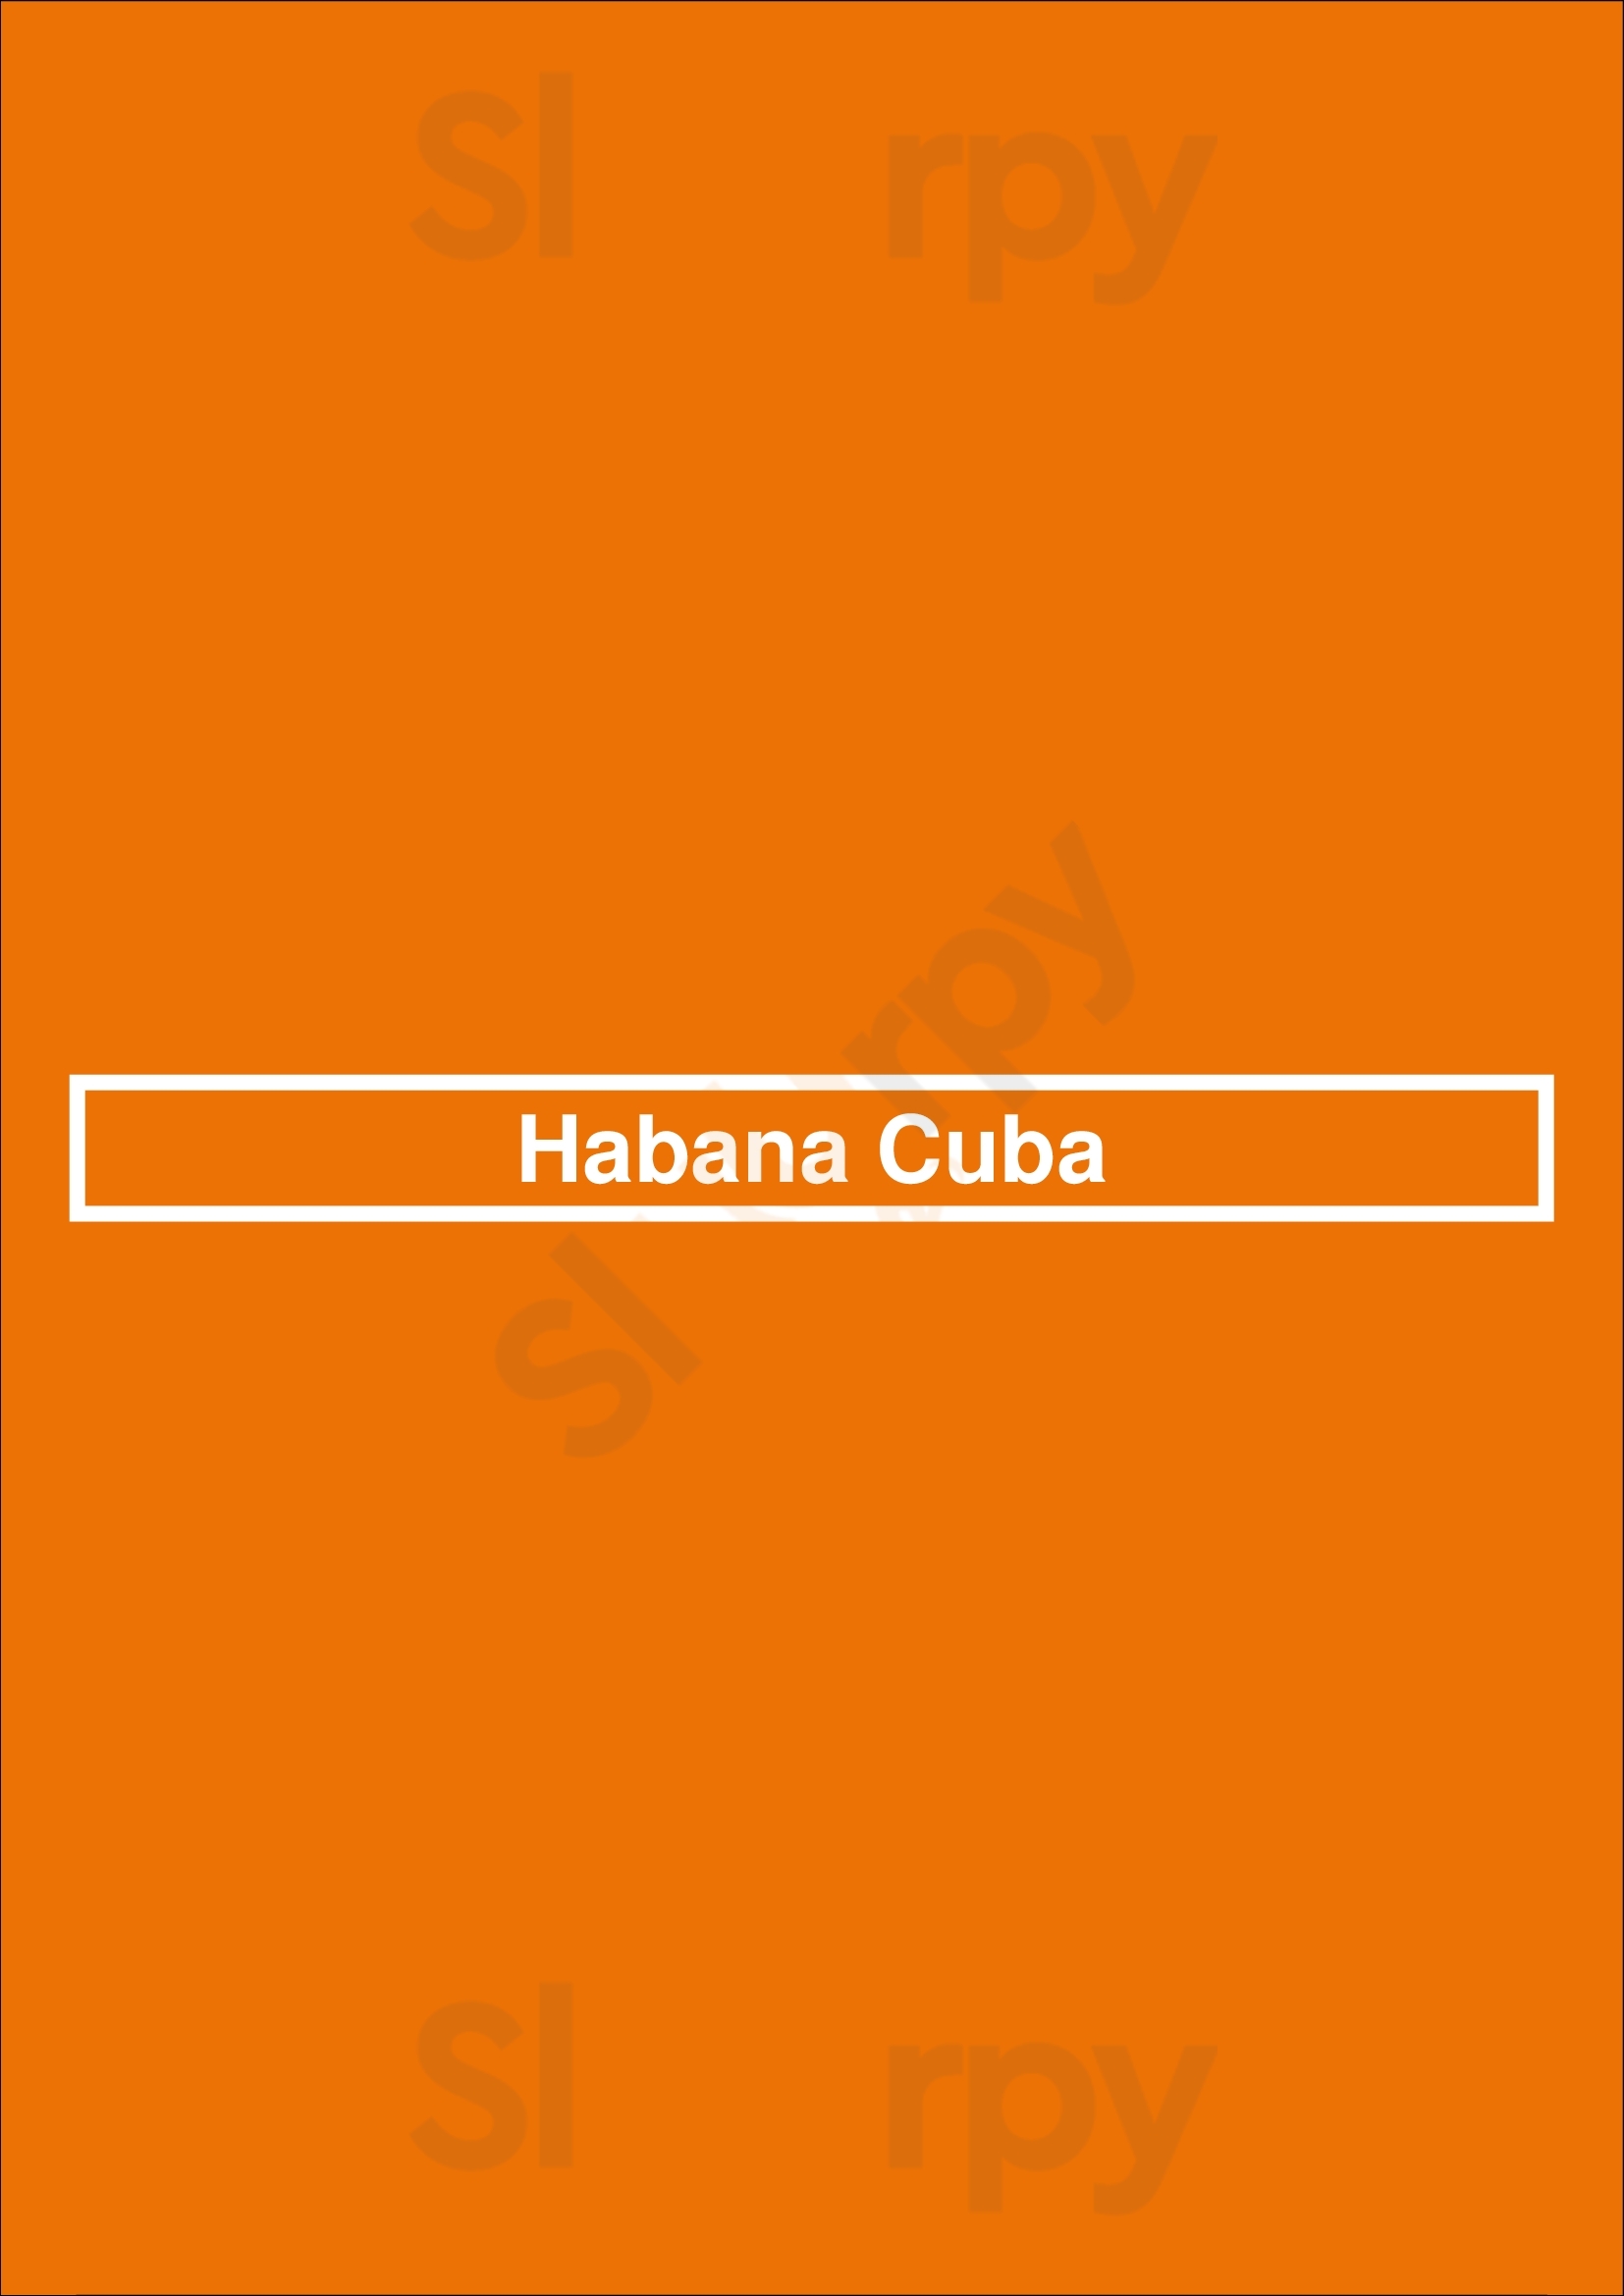 Habana Cuba Restaurant San Jose Menu - 1